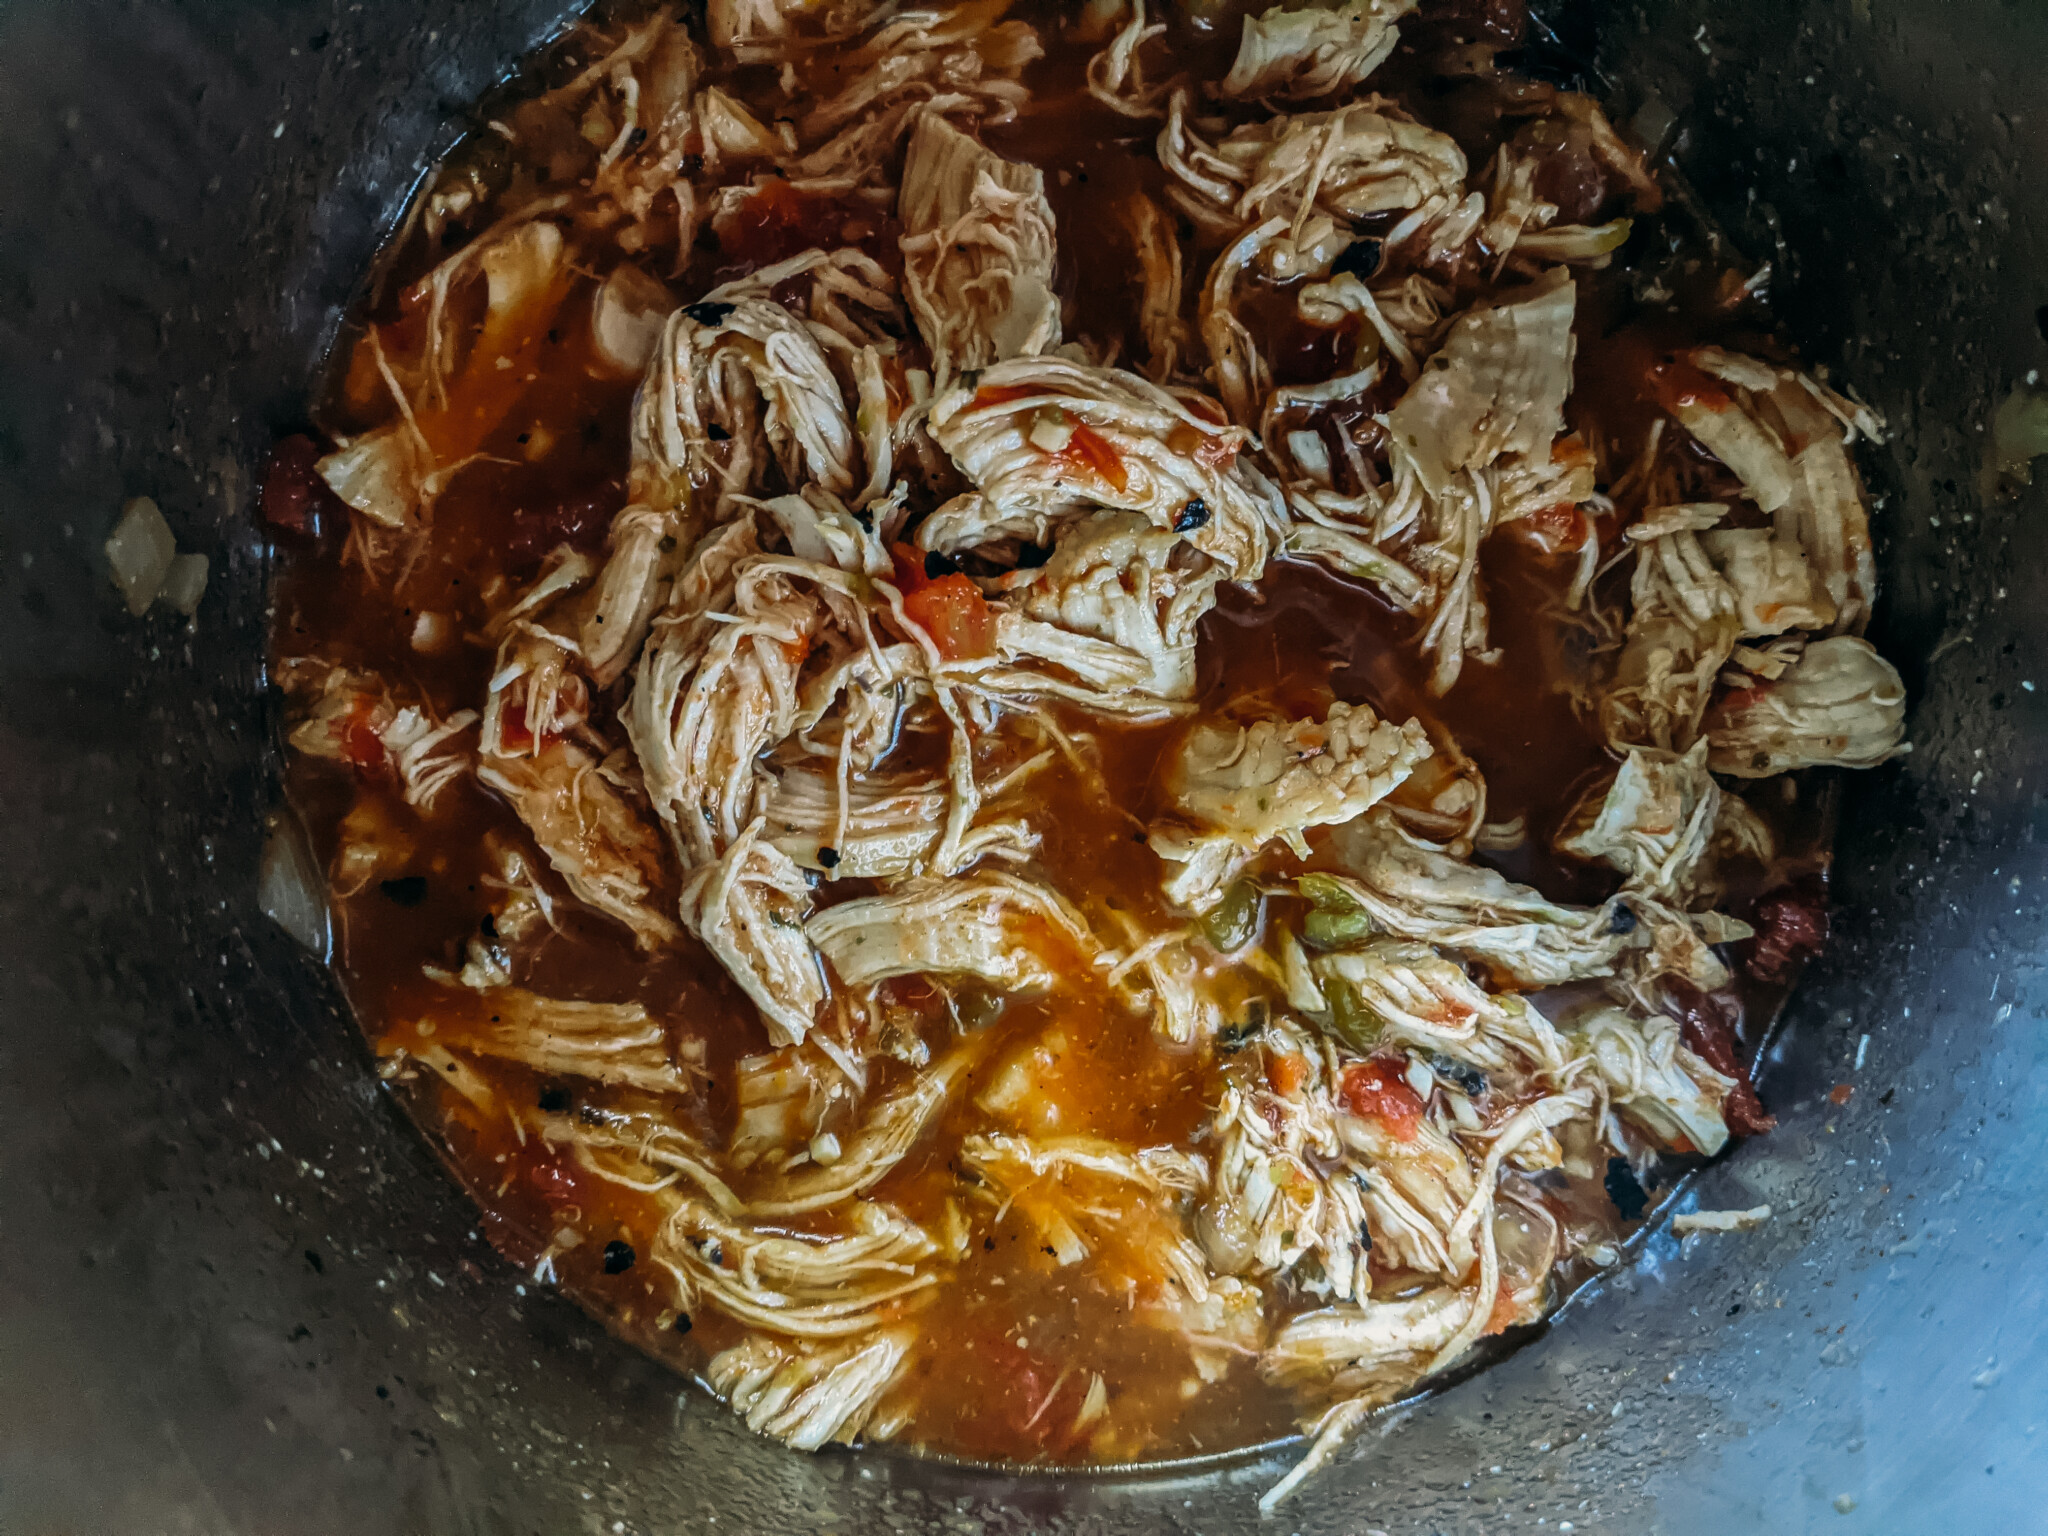 Shredded chicken in broth in a pot.